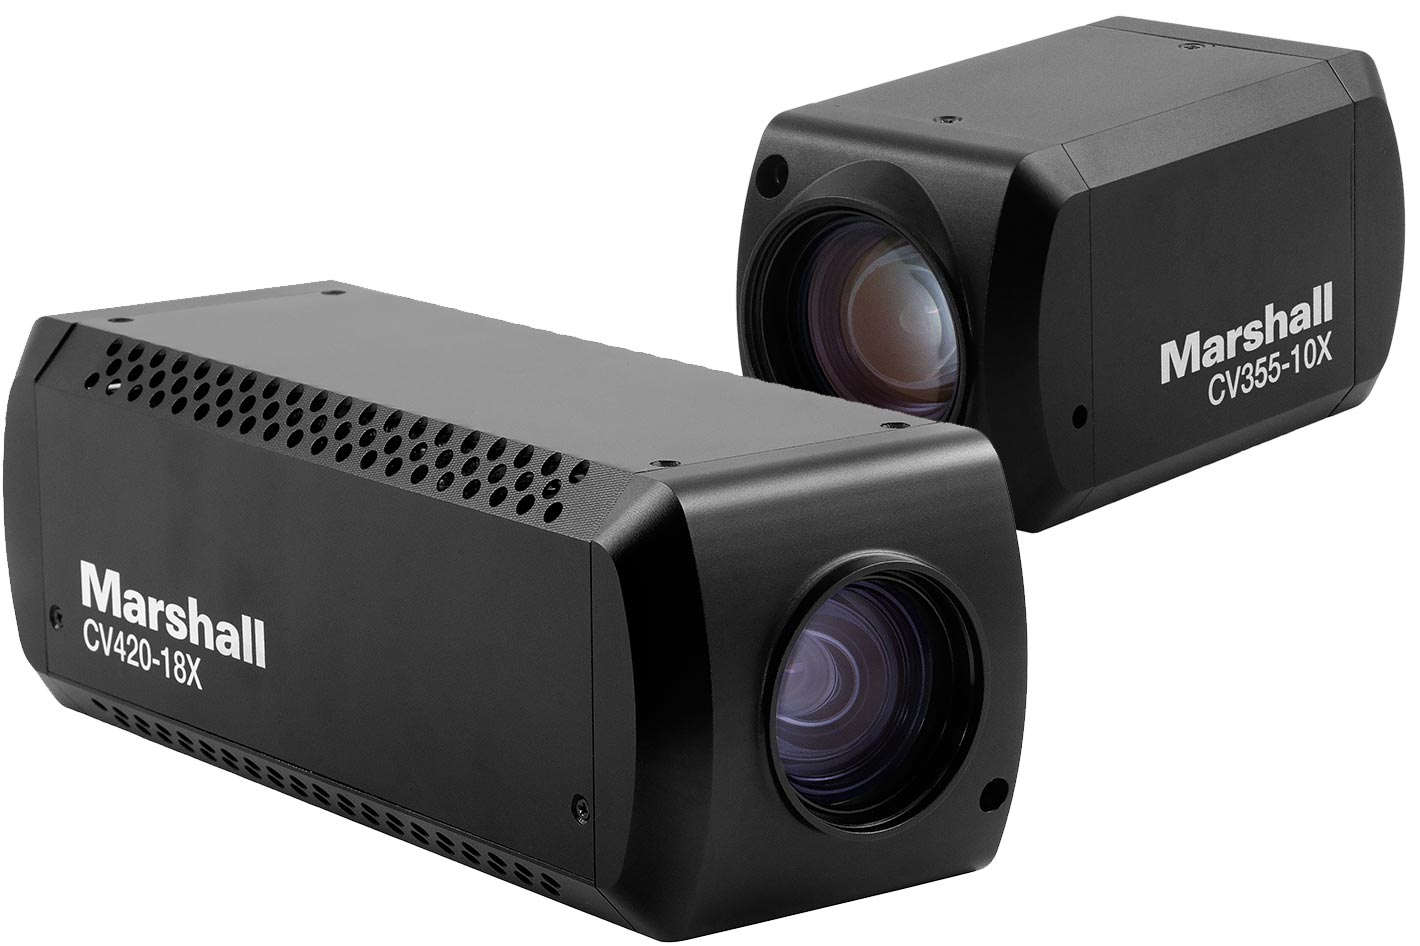 Marshall: new CV420-18X and CV355-10X zoom block cameras